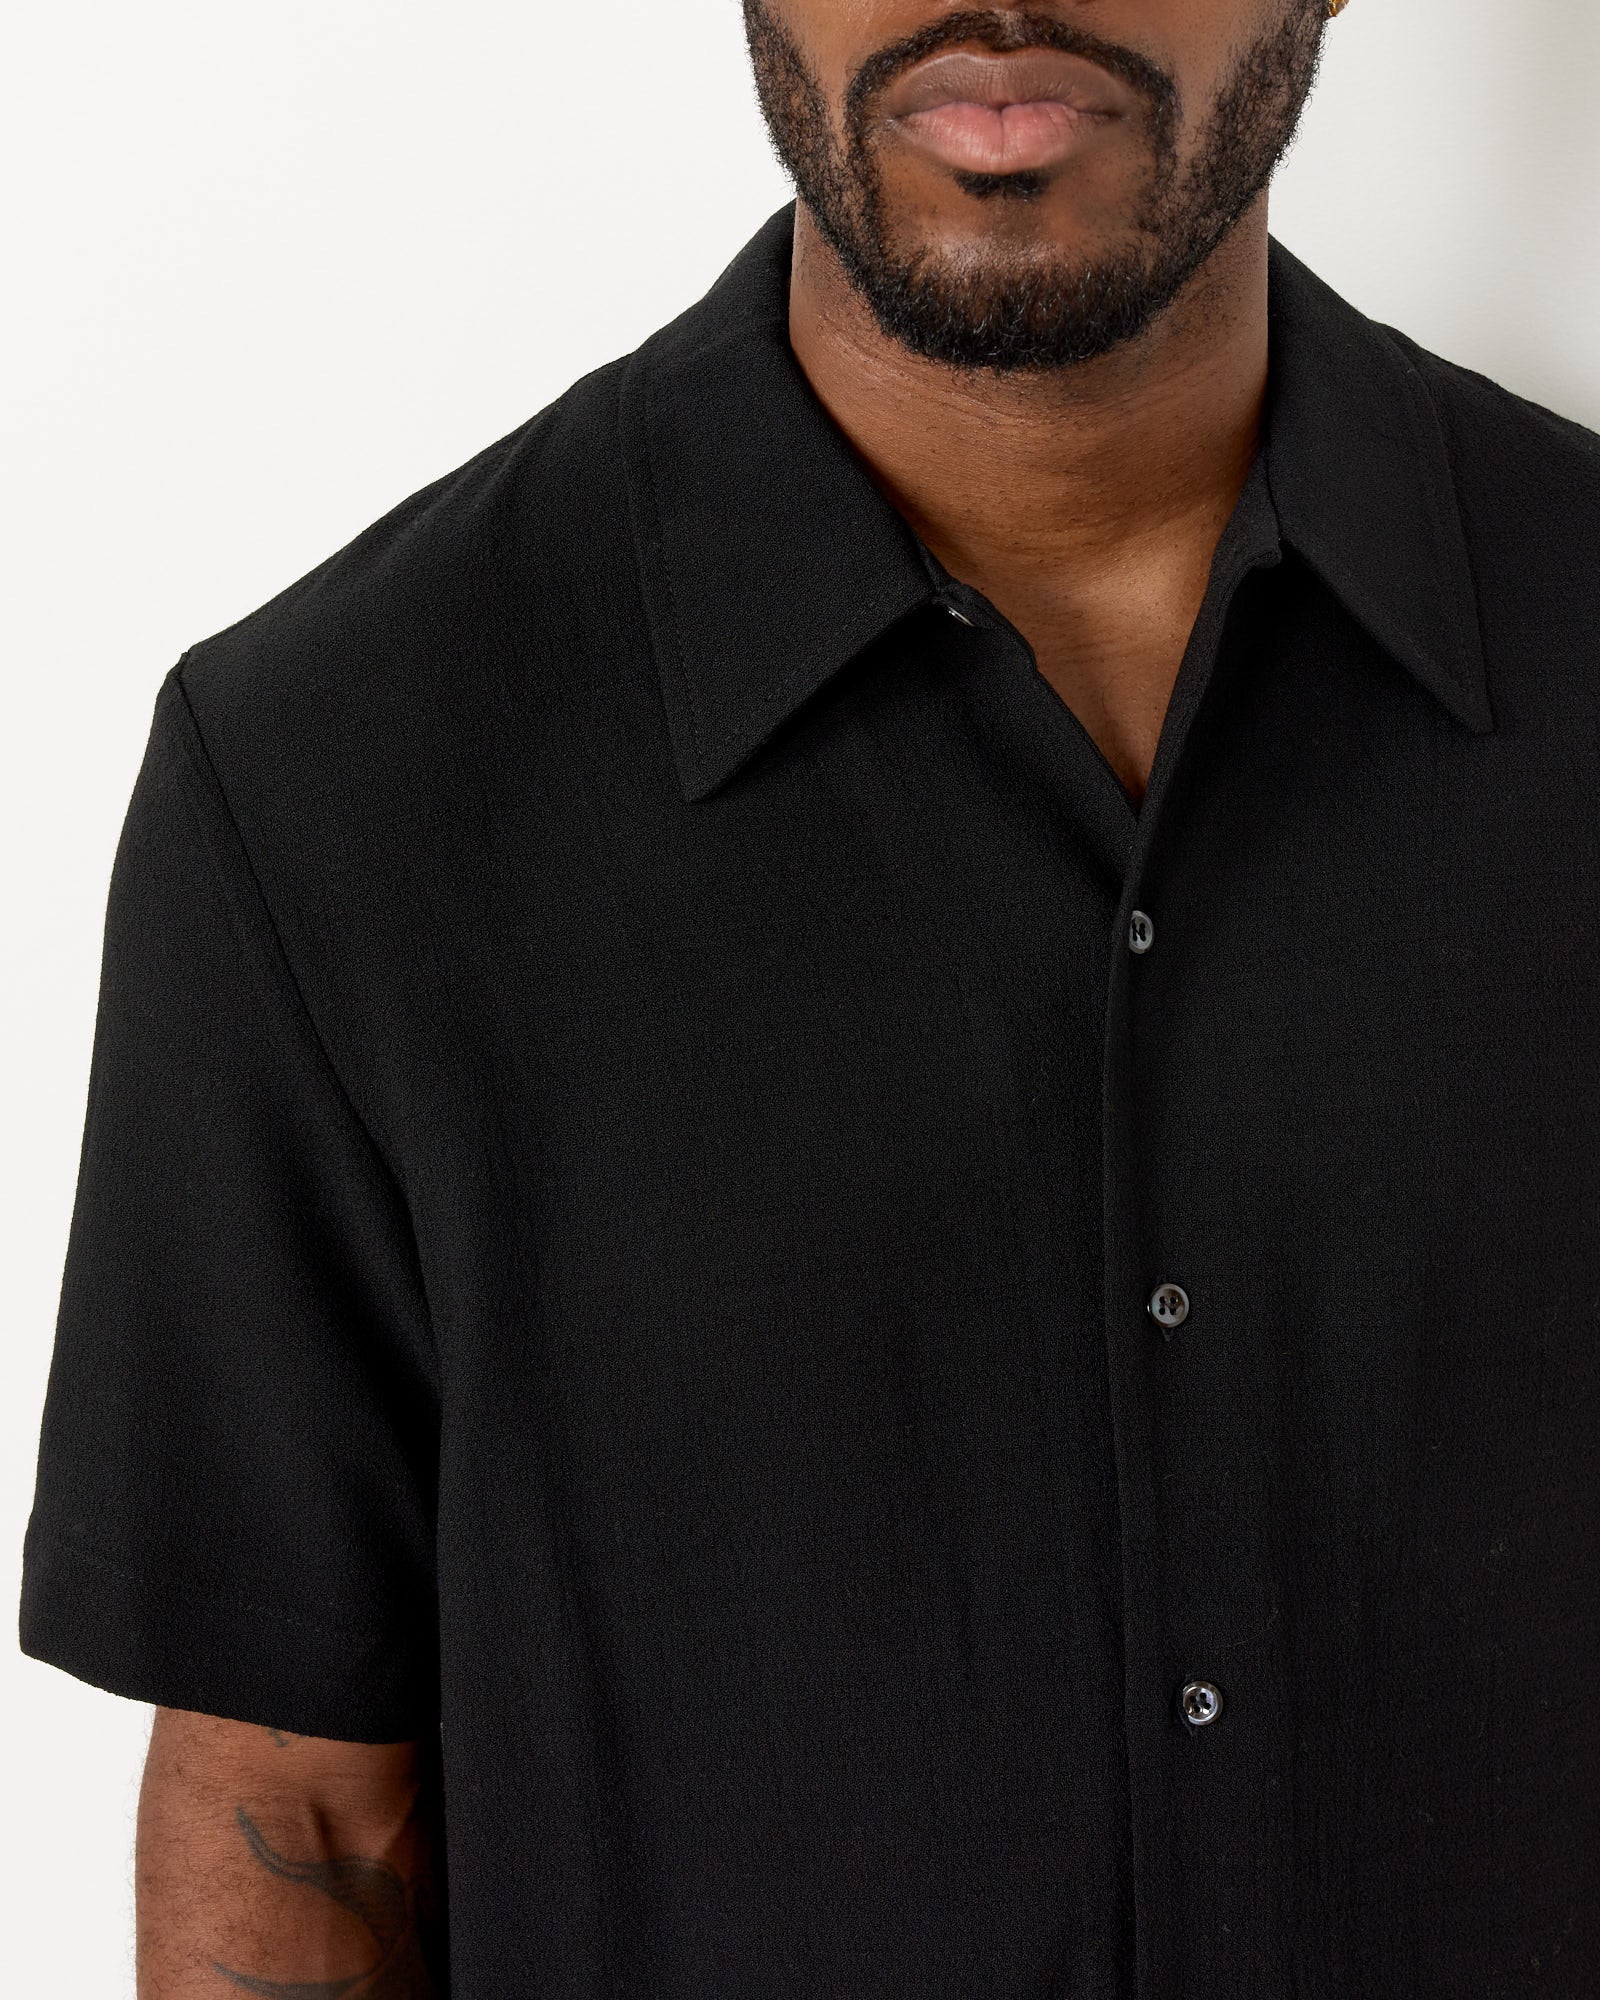 Suneham Shirt in Black Crepe